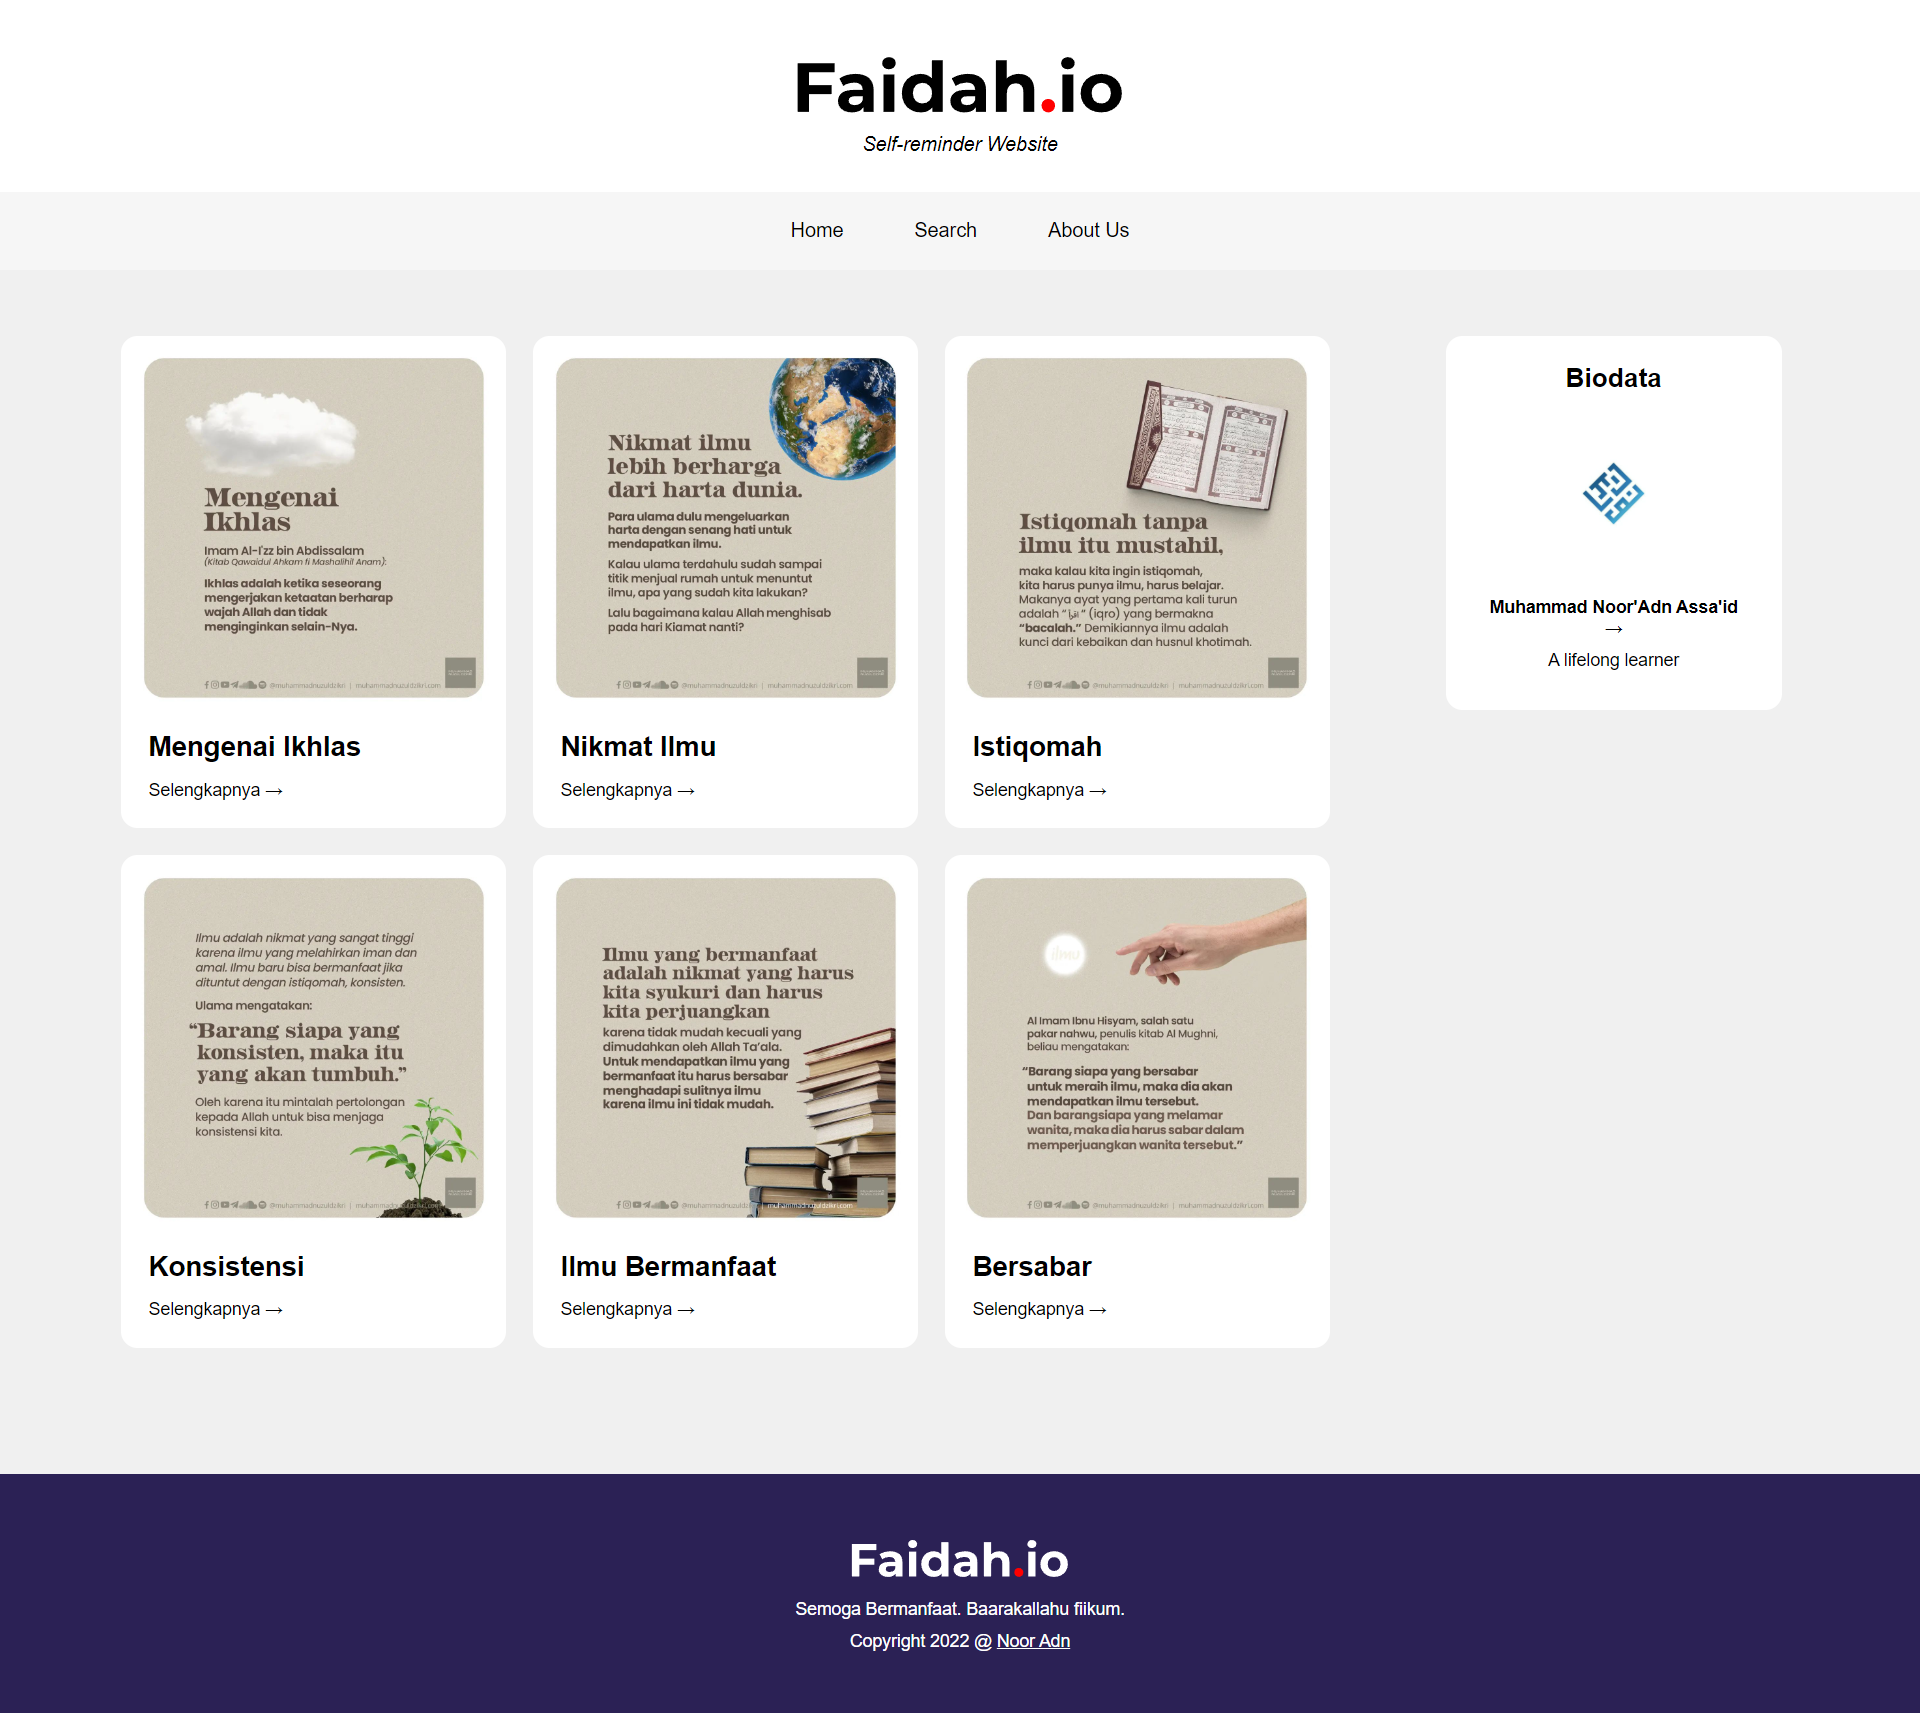 Faidah.io Page Preview Image